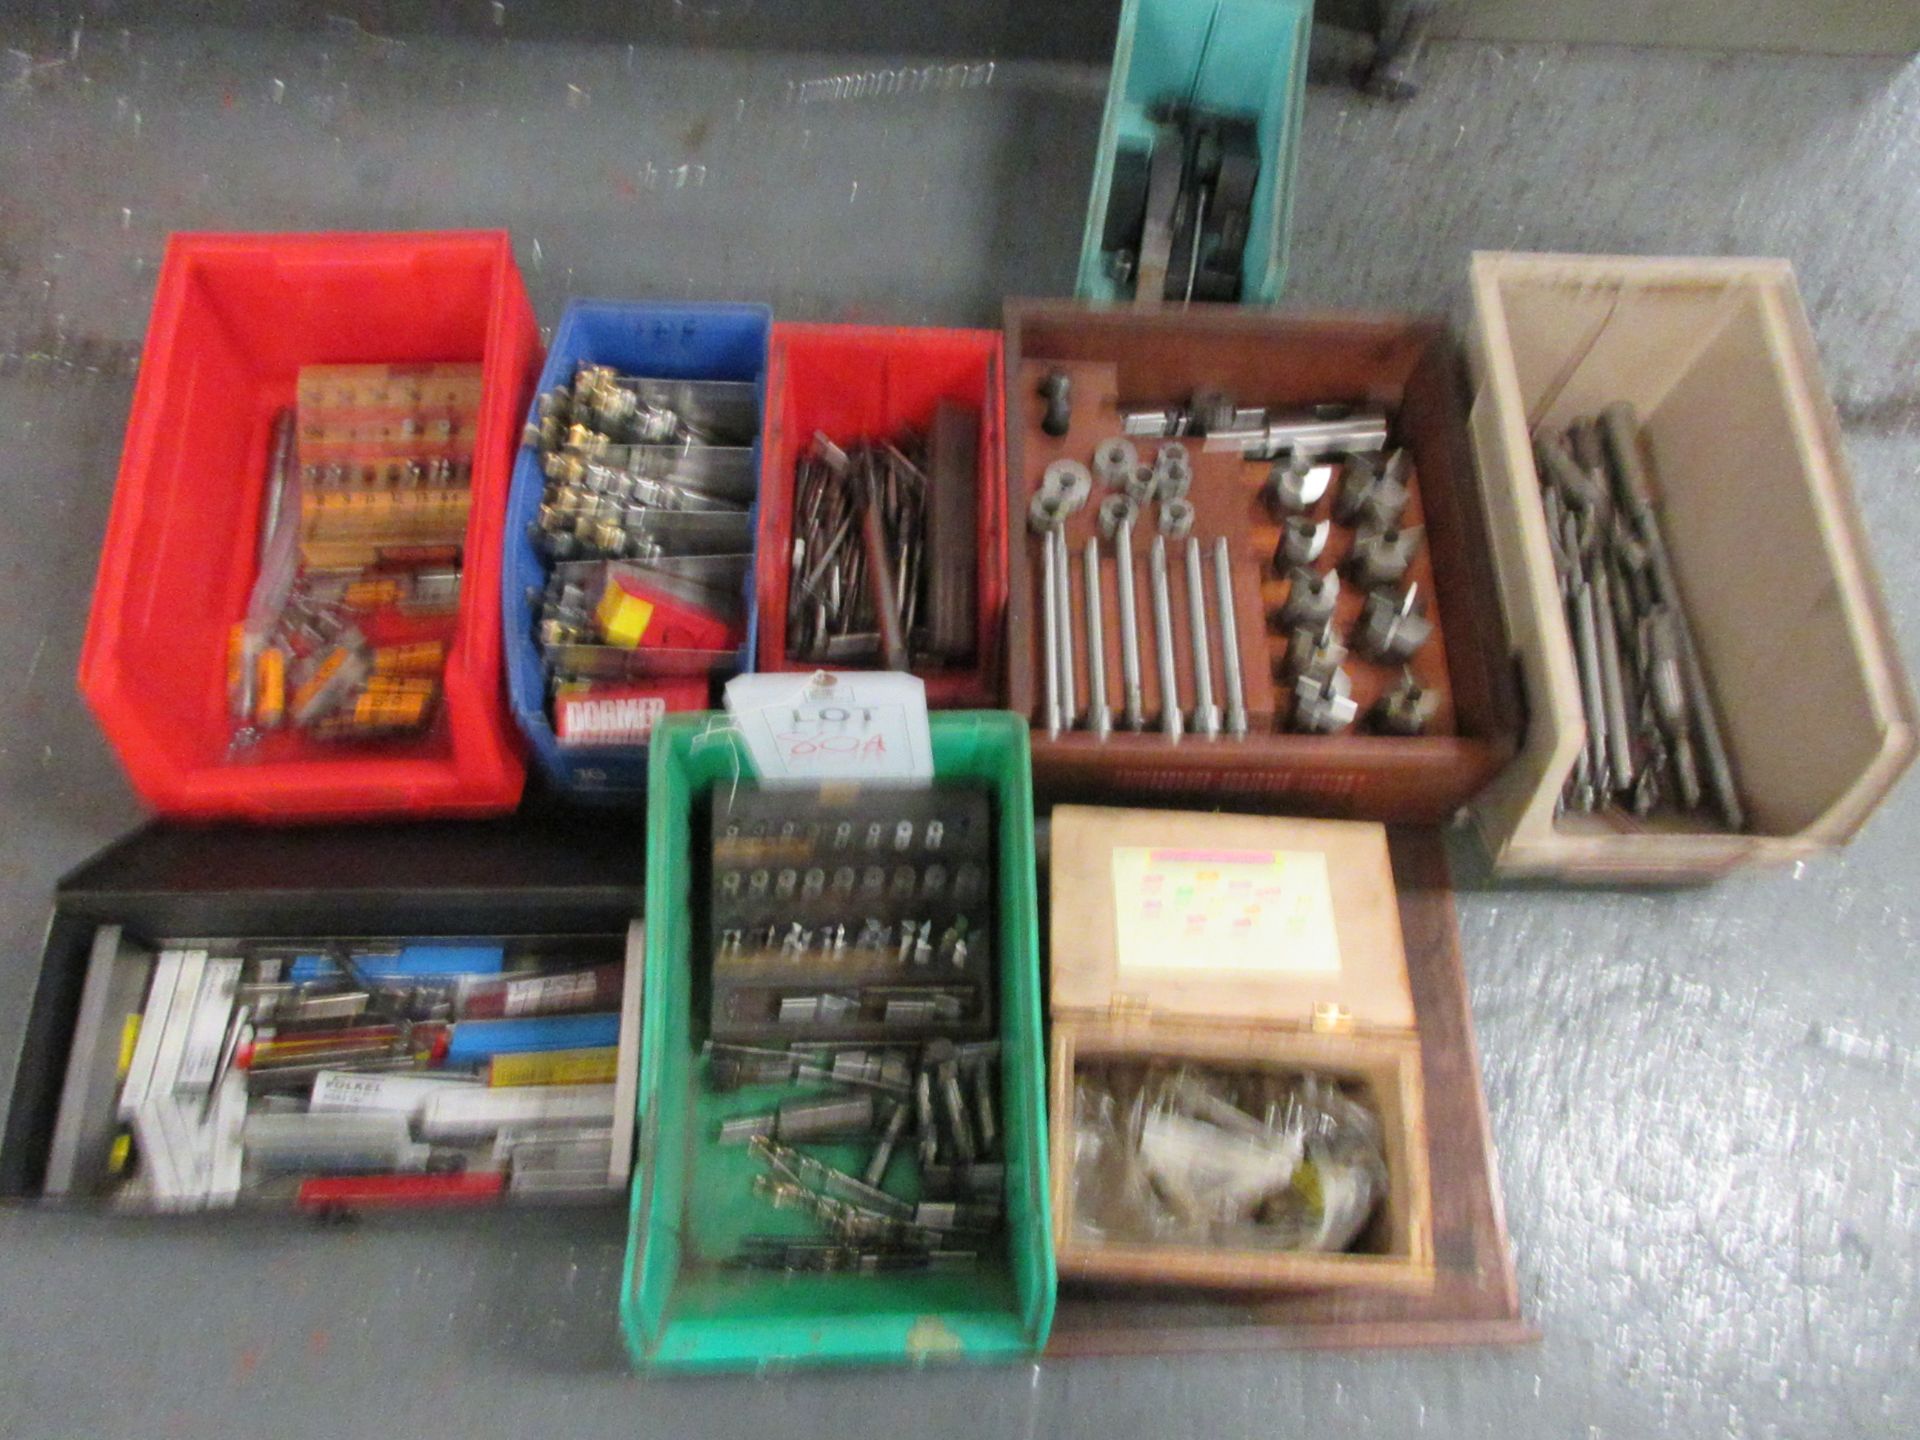 Quantity of assorted cutters, drill bits, etc.